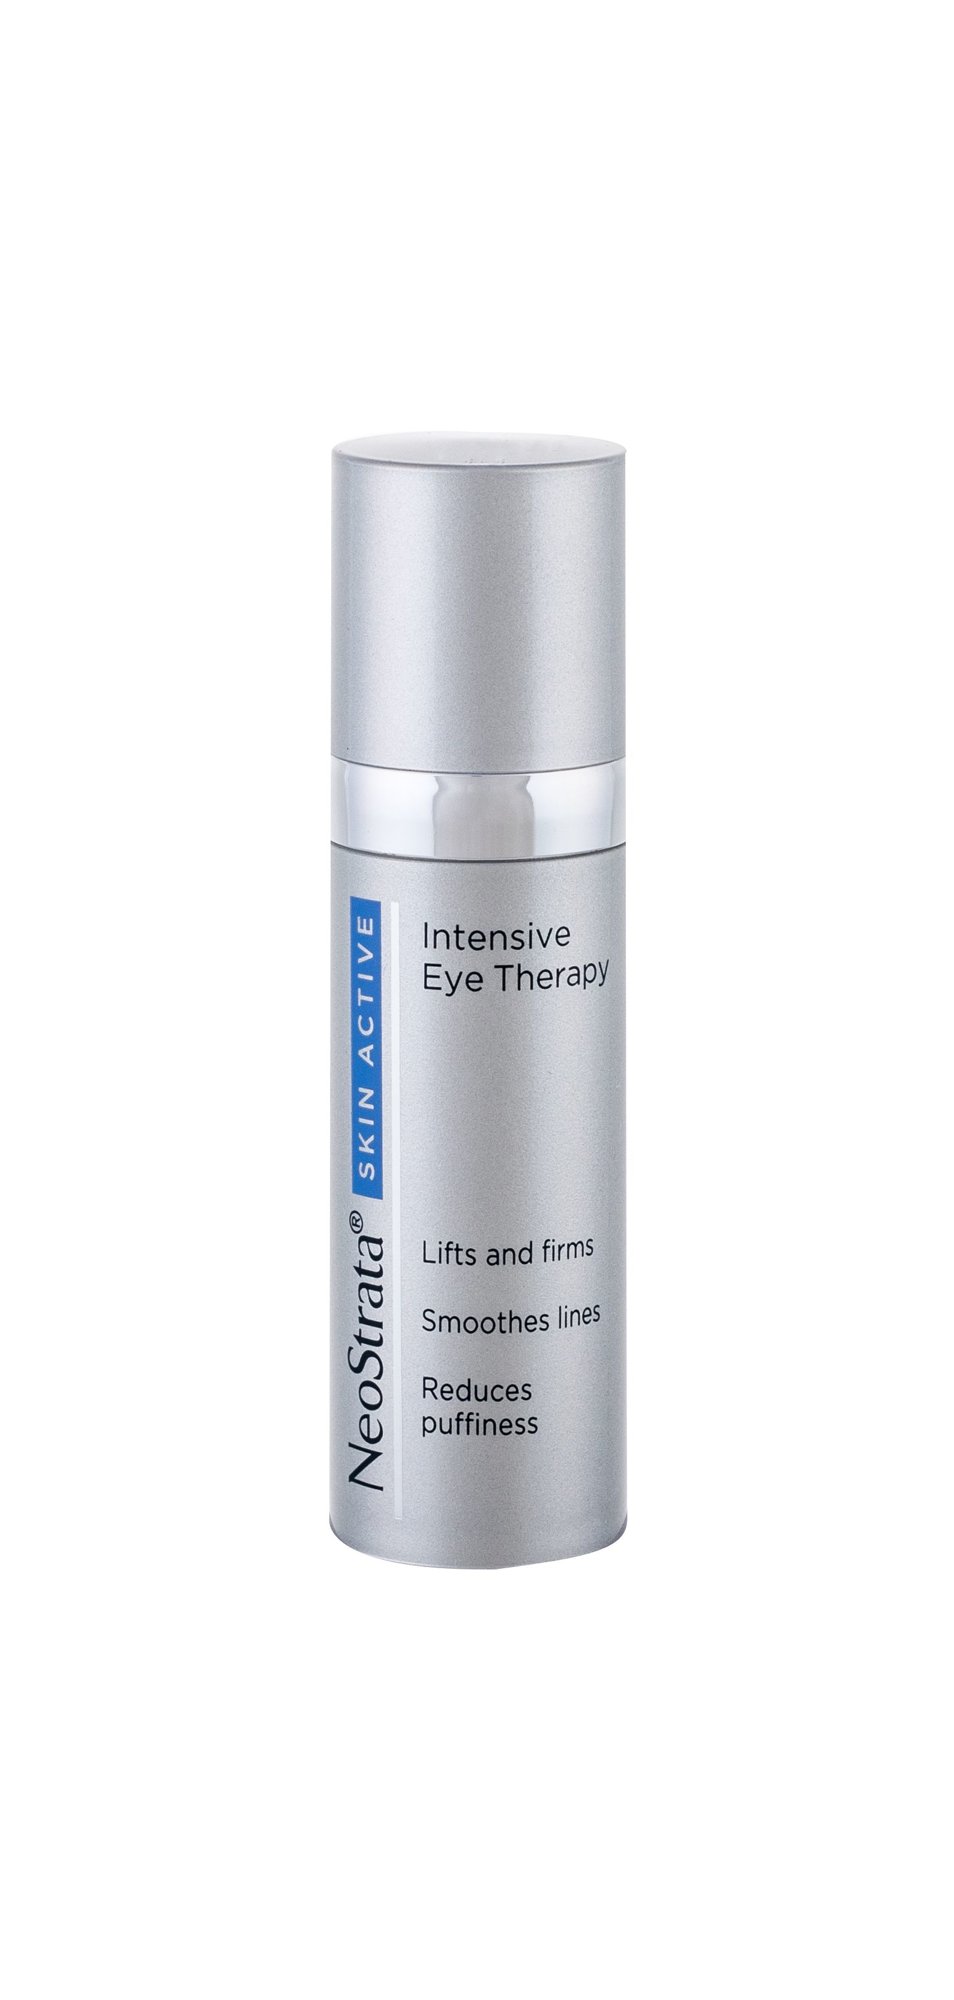 NeoStrata Skin Active Intensive Eye Therapy 15g paakių kremas